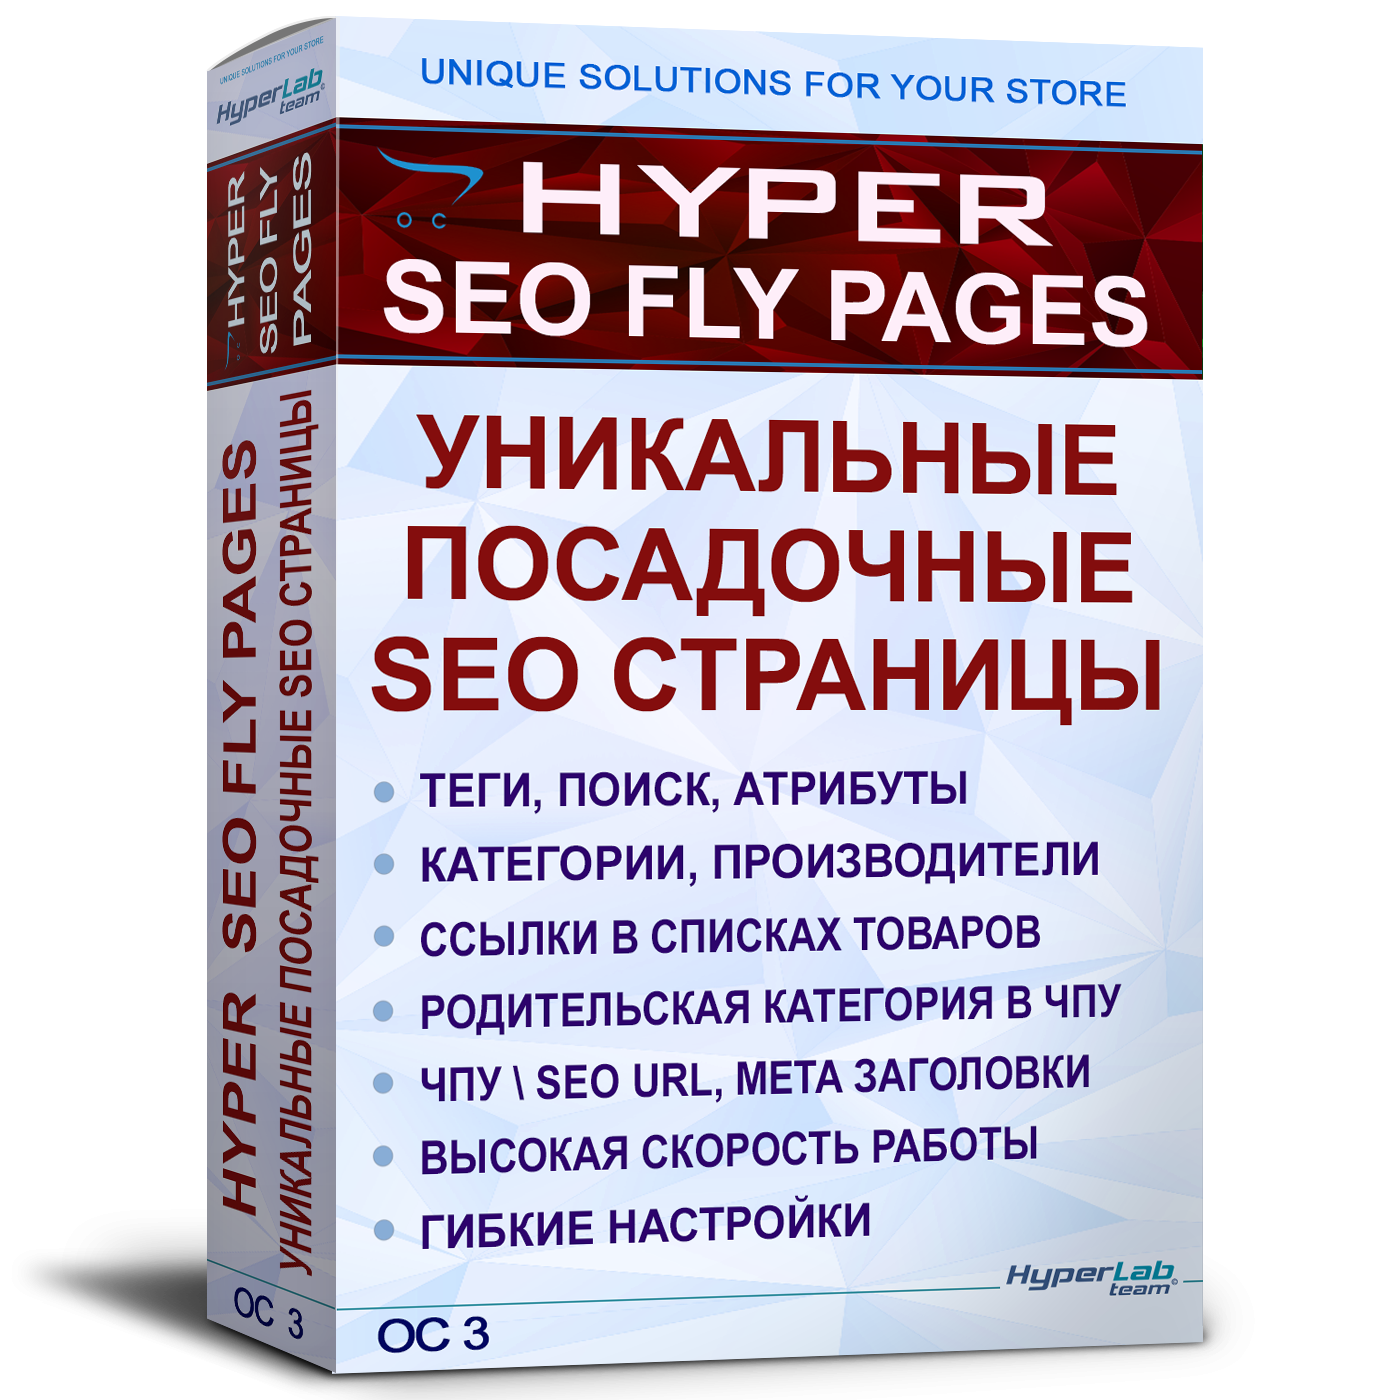 HYPER SEO Fly Pages - Посадочные SEO страницы